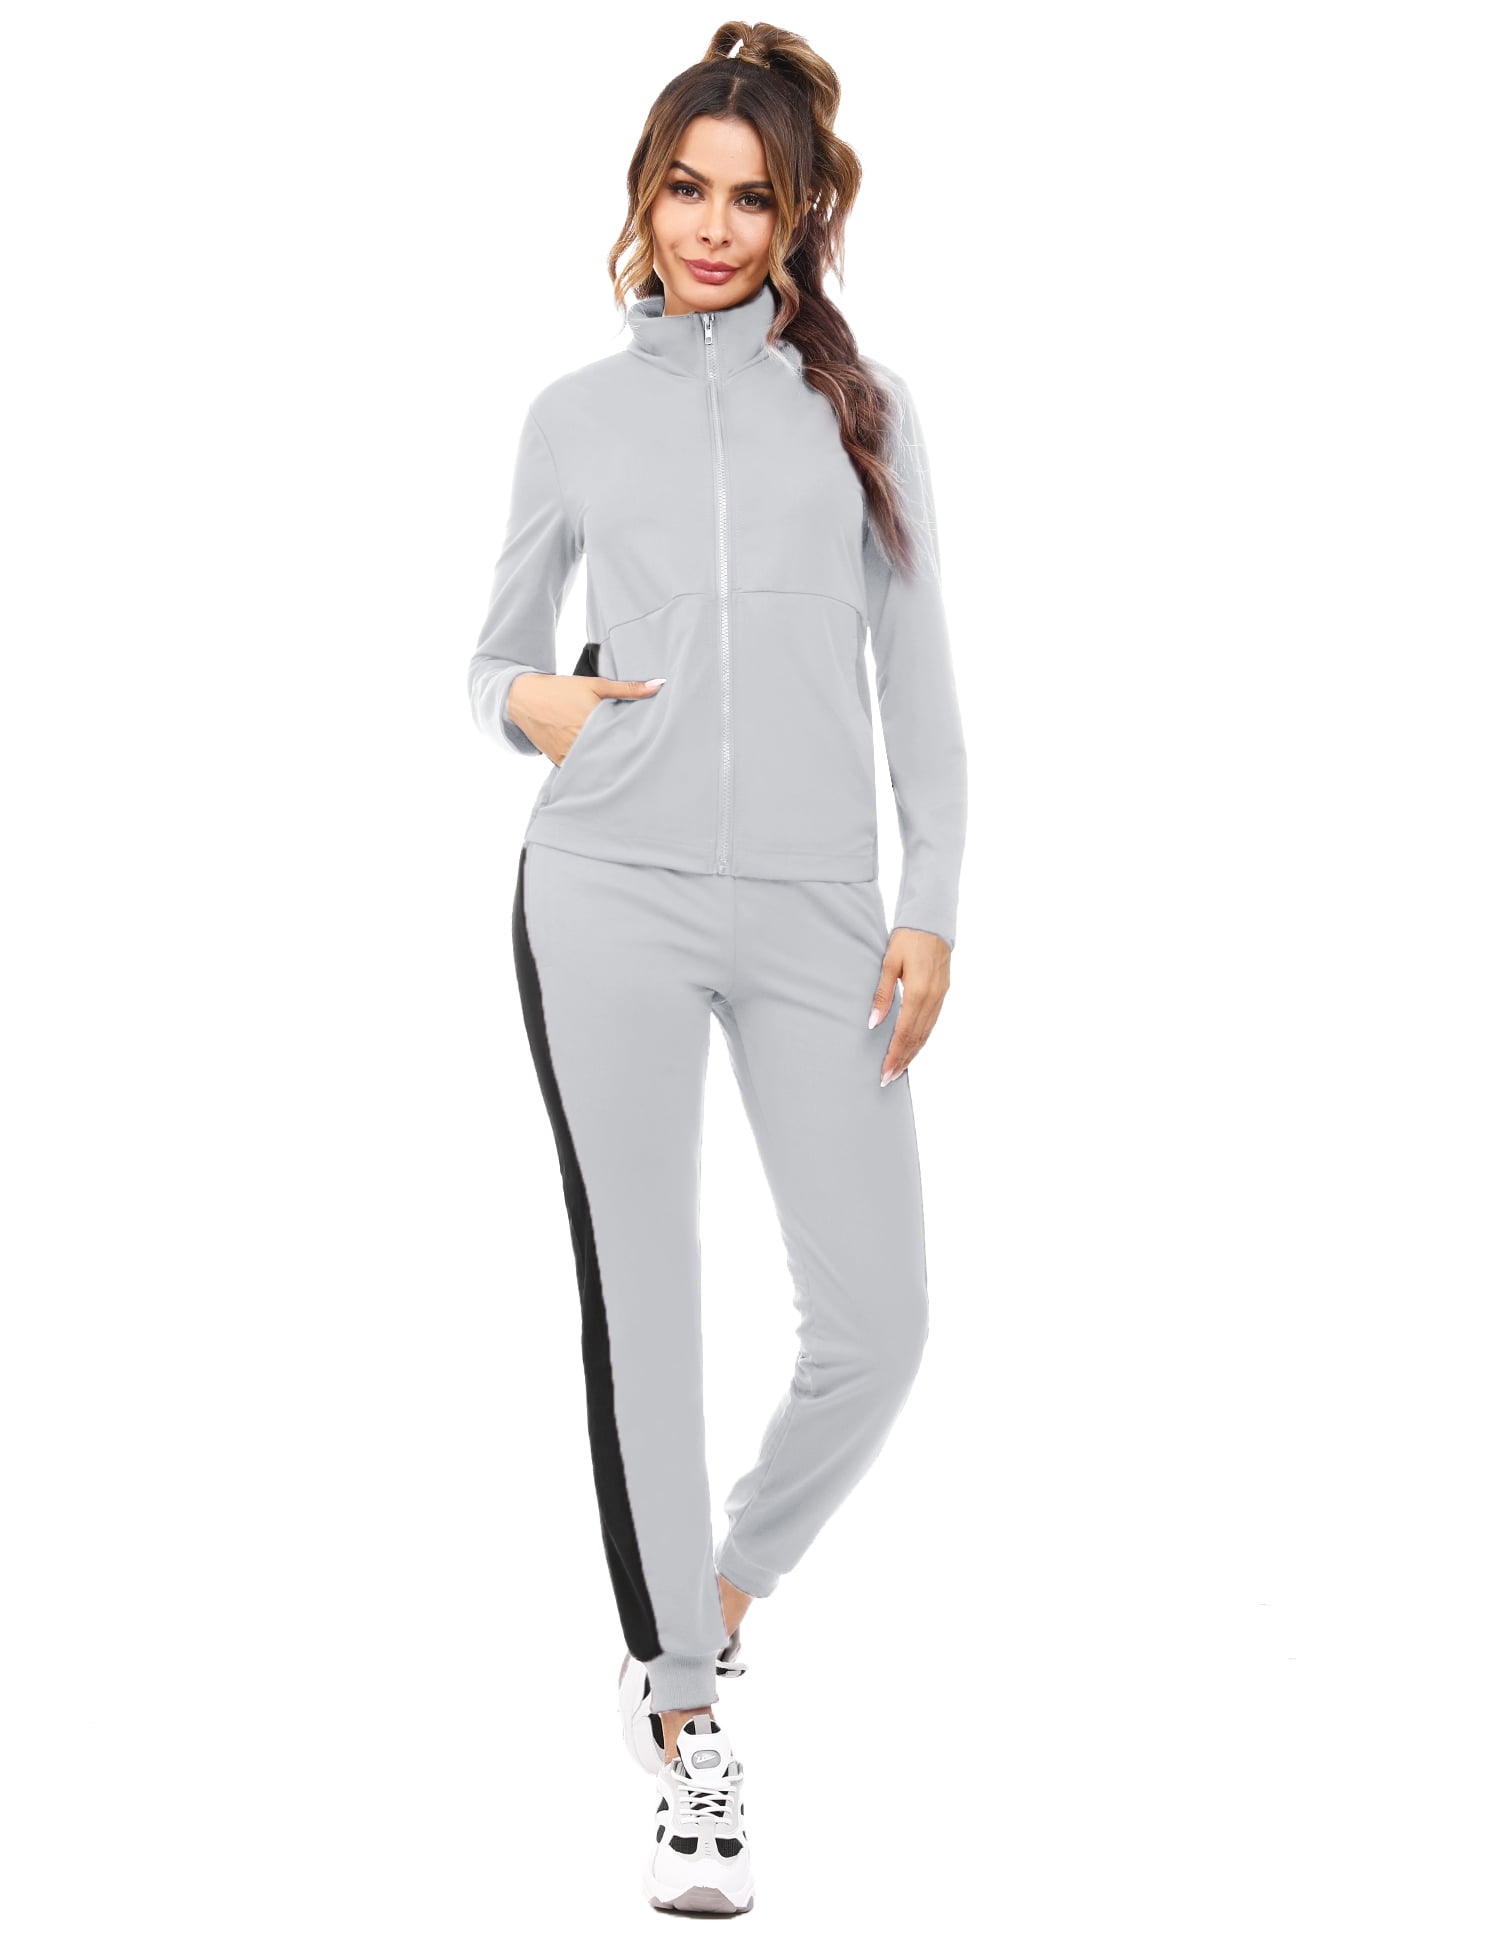 Uniexcosm Women Sweatsuits 2 Piece Outfits Sets Zip Activewear ...